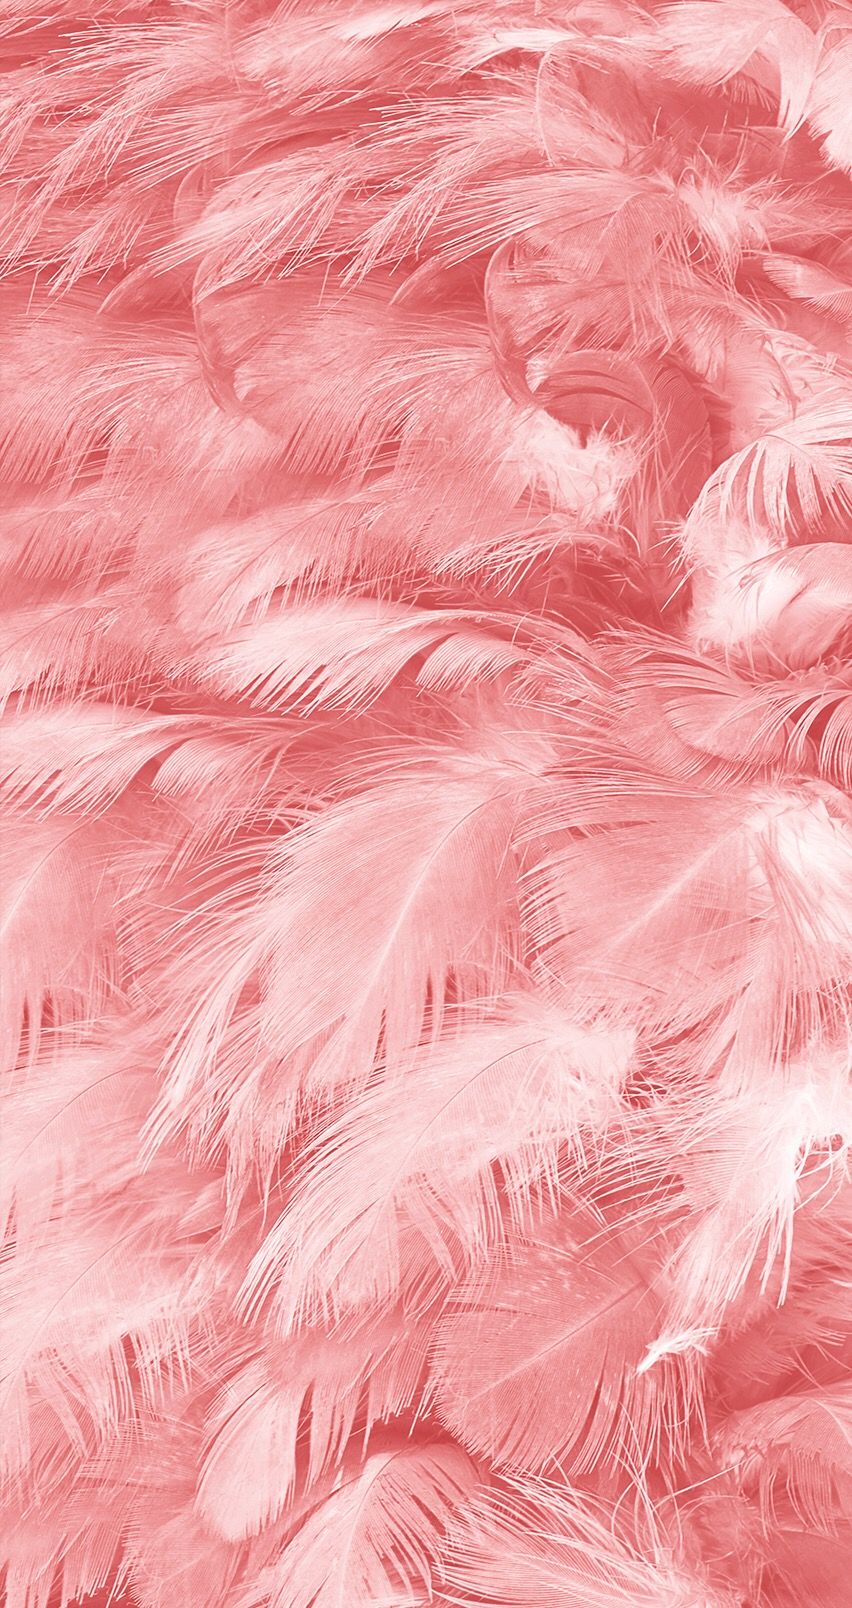 Pink Feathers Limited Arkaplan Tasar Mlar iPhone Duvar